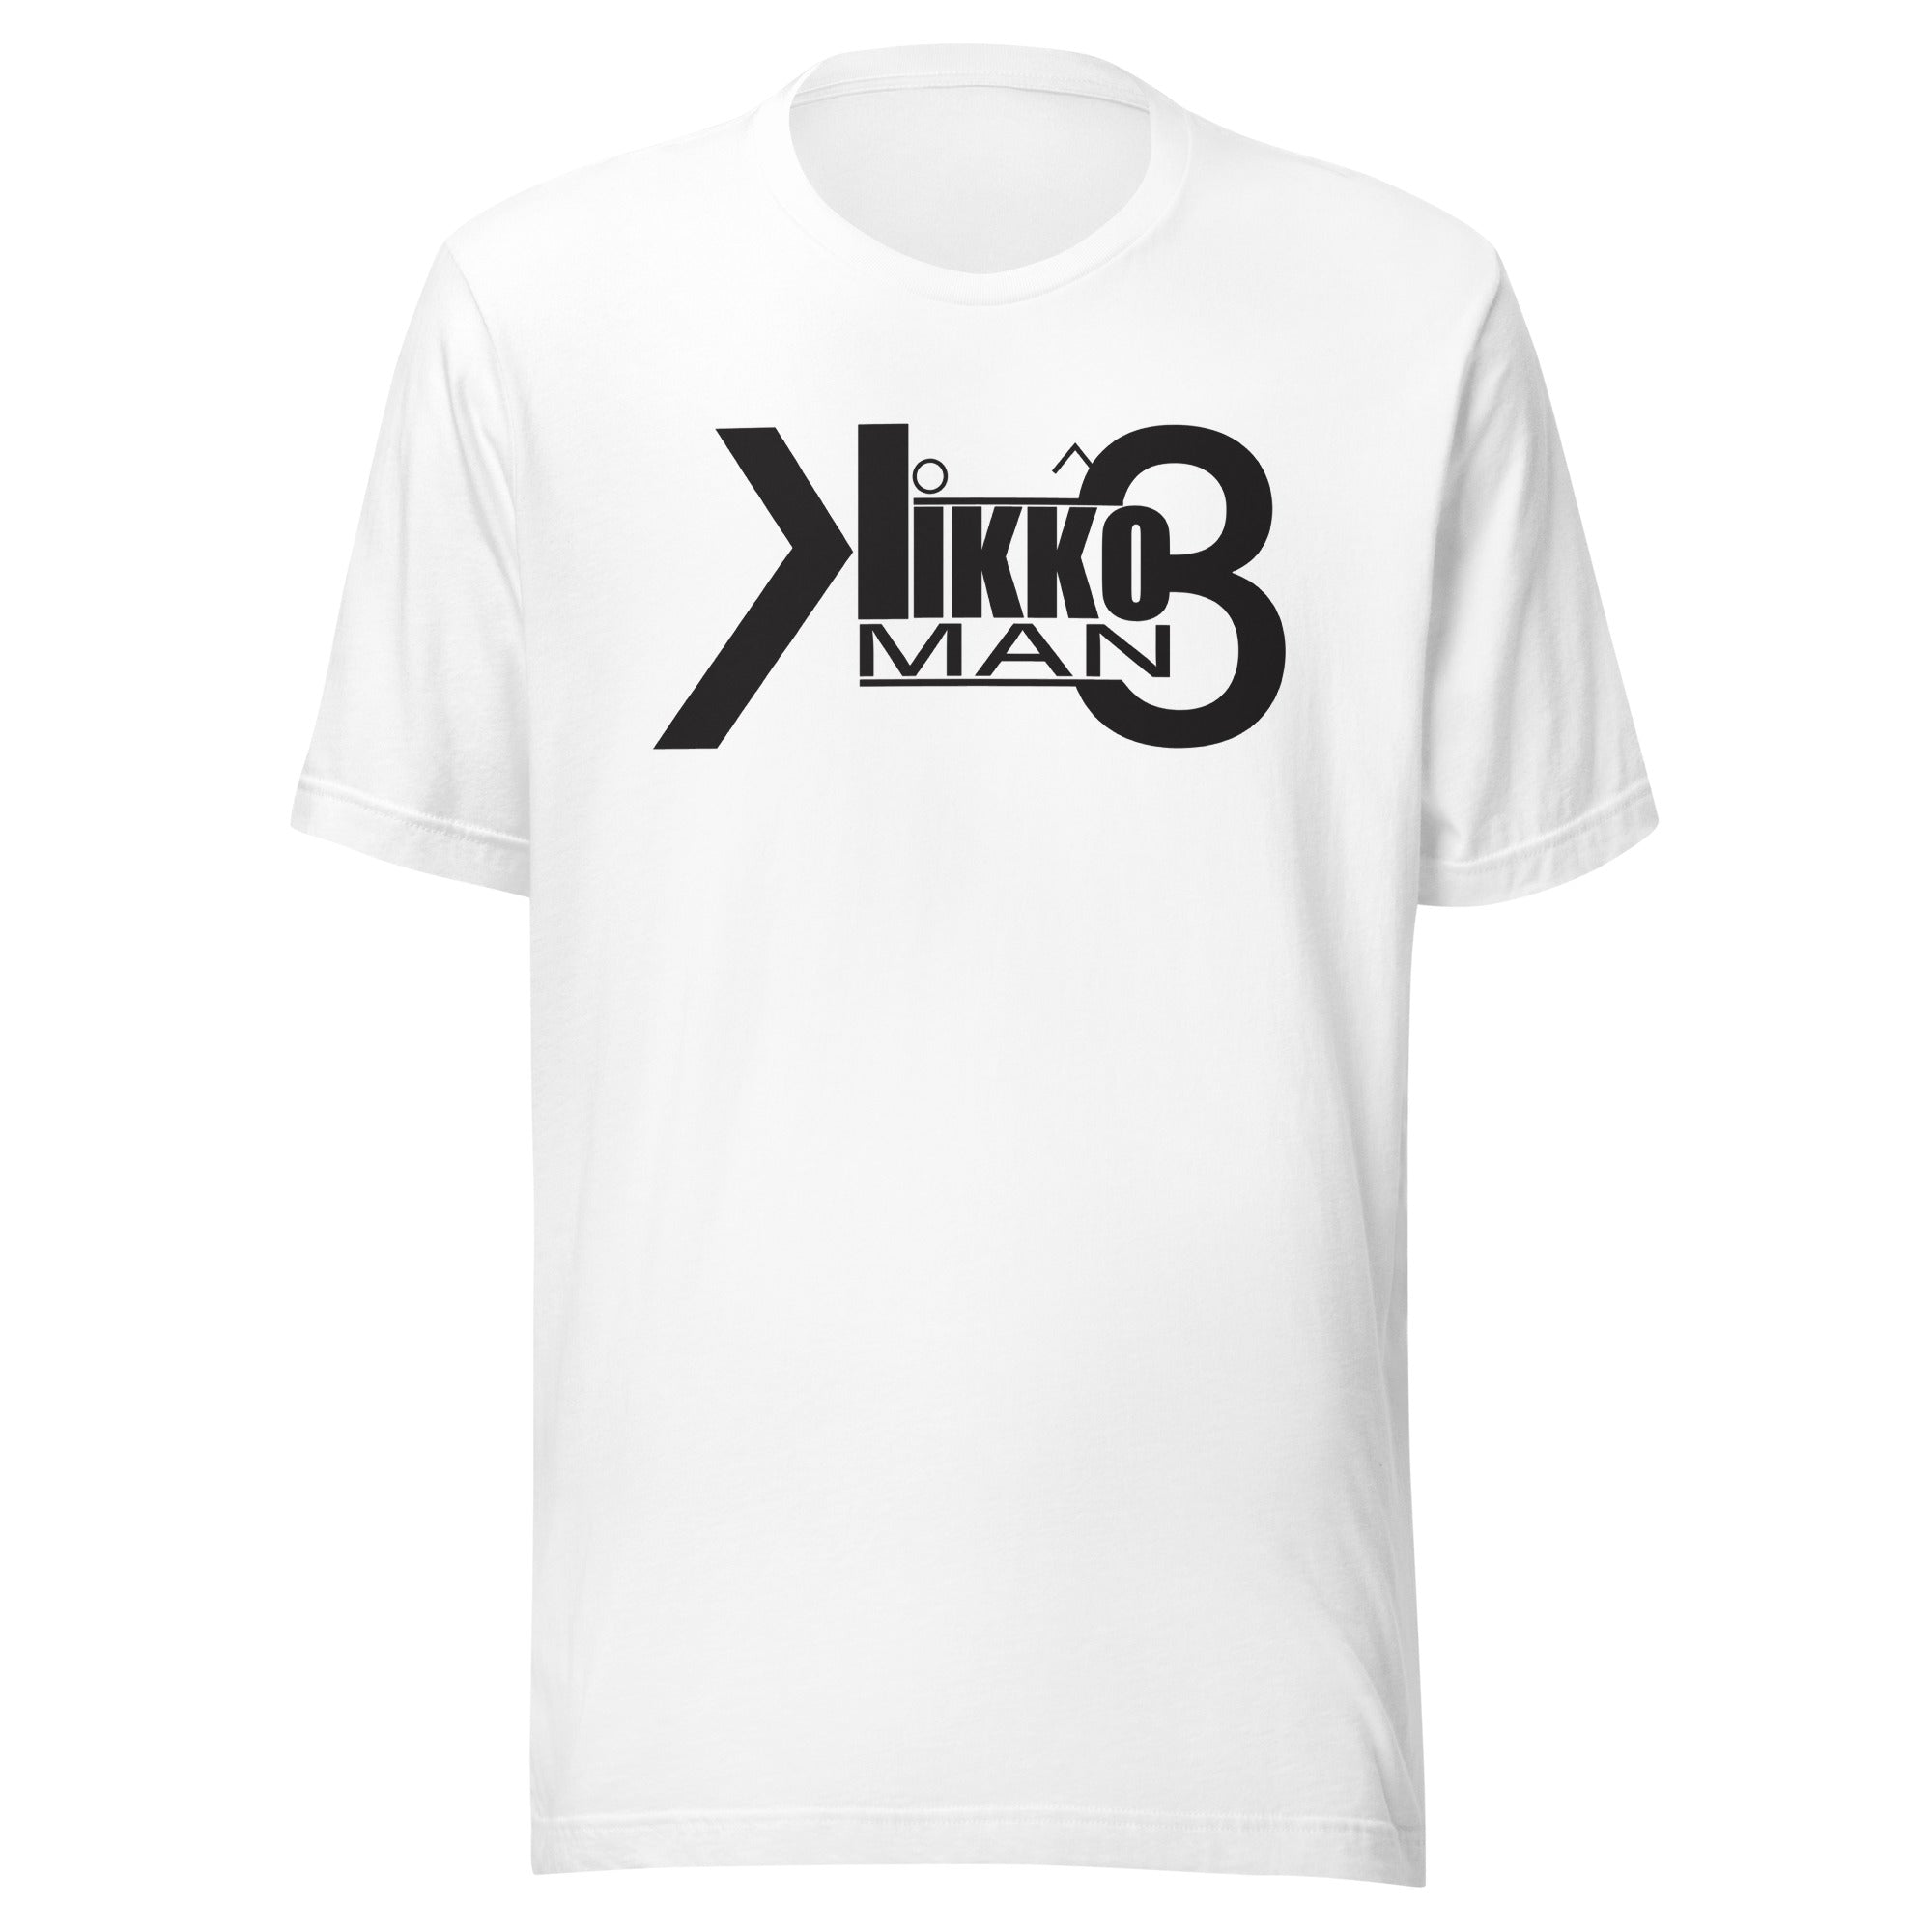 Kikkoman3 - Unisex t-shirt